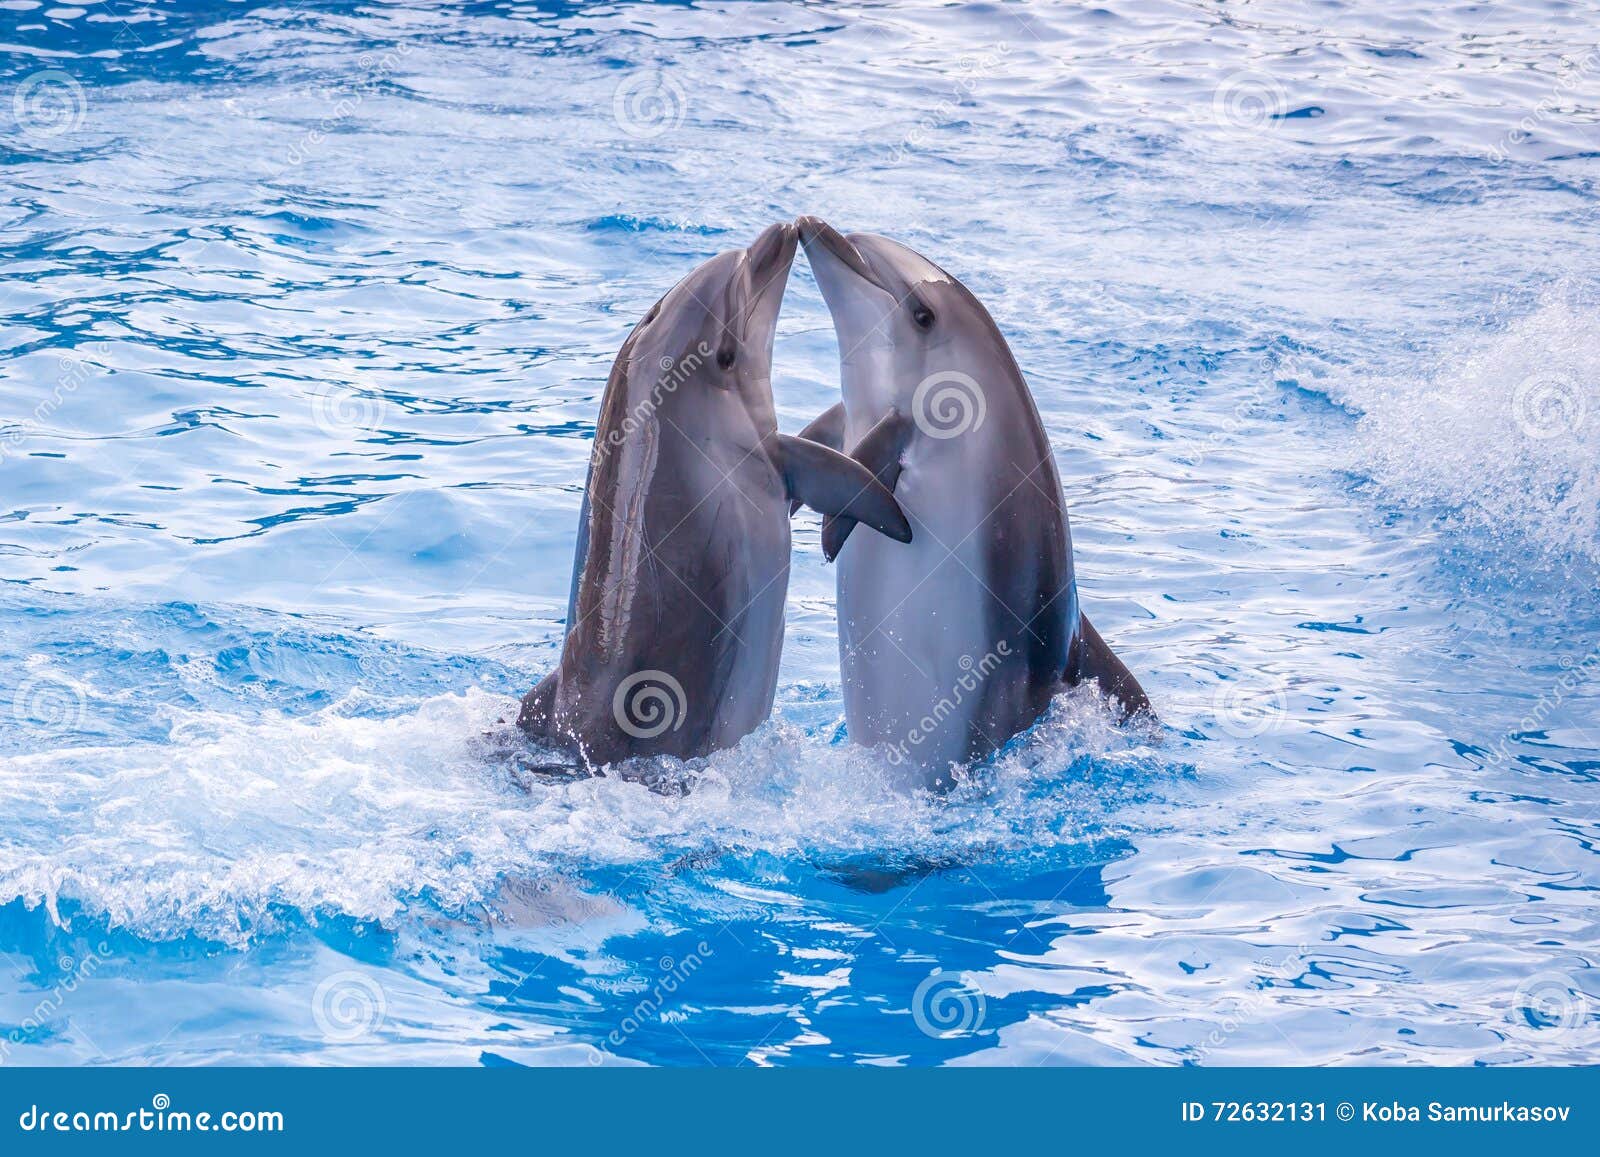 a cute dolphins during a speech at the dolphinarium, batumi, geo